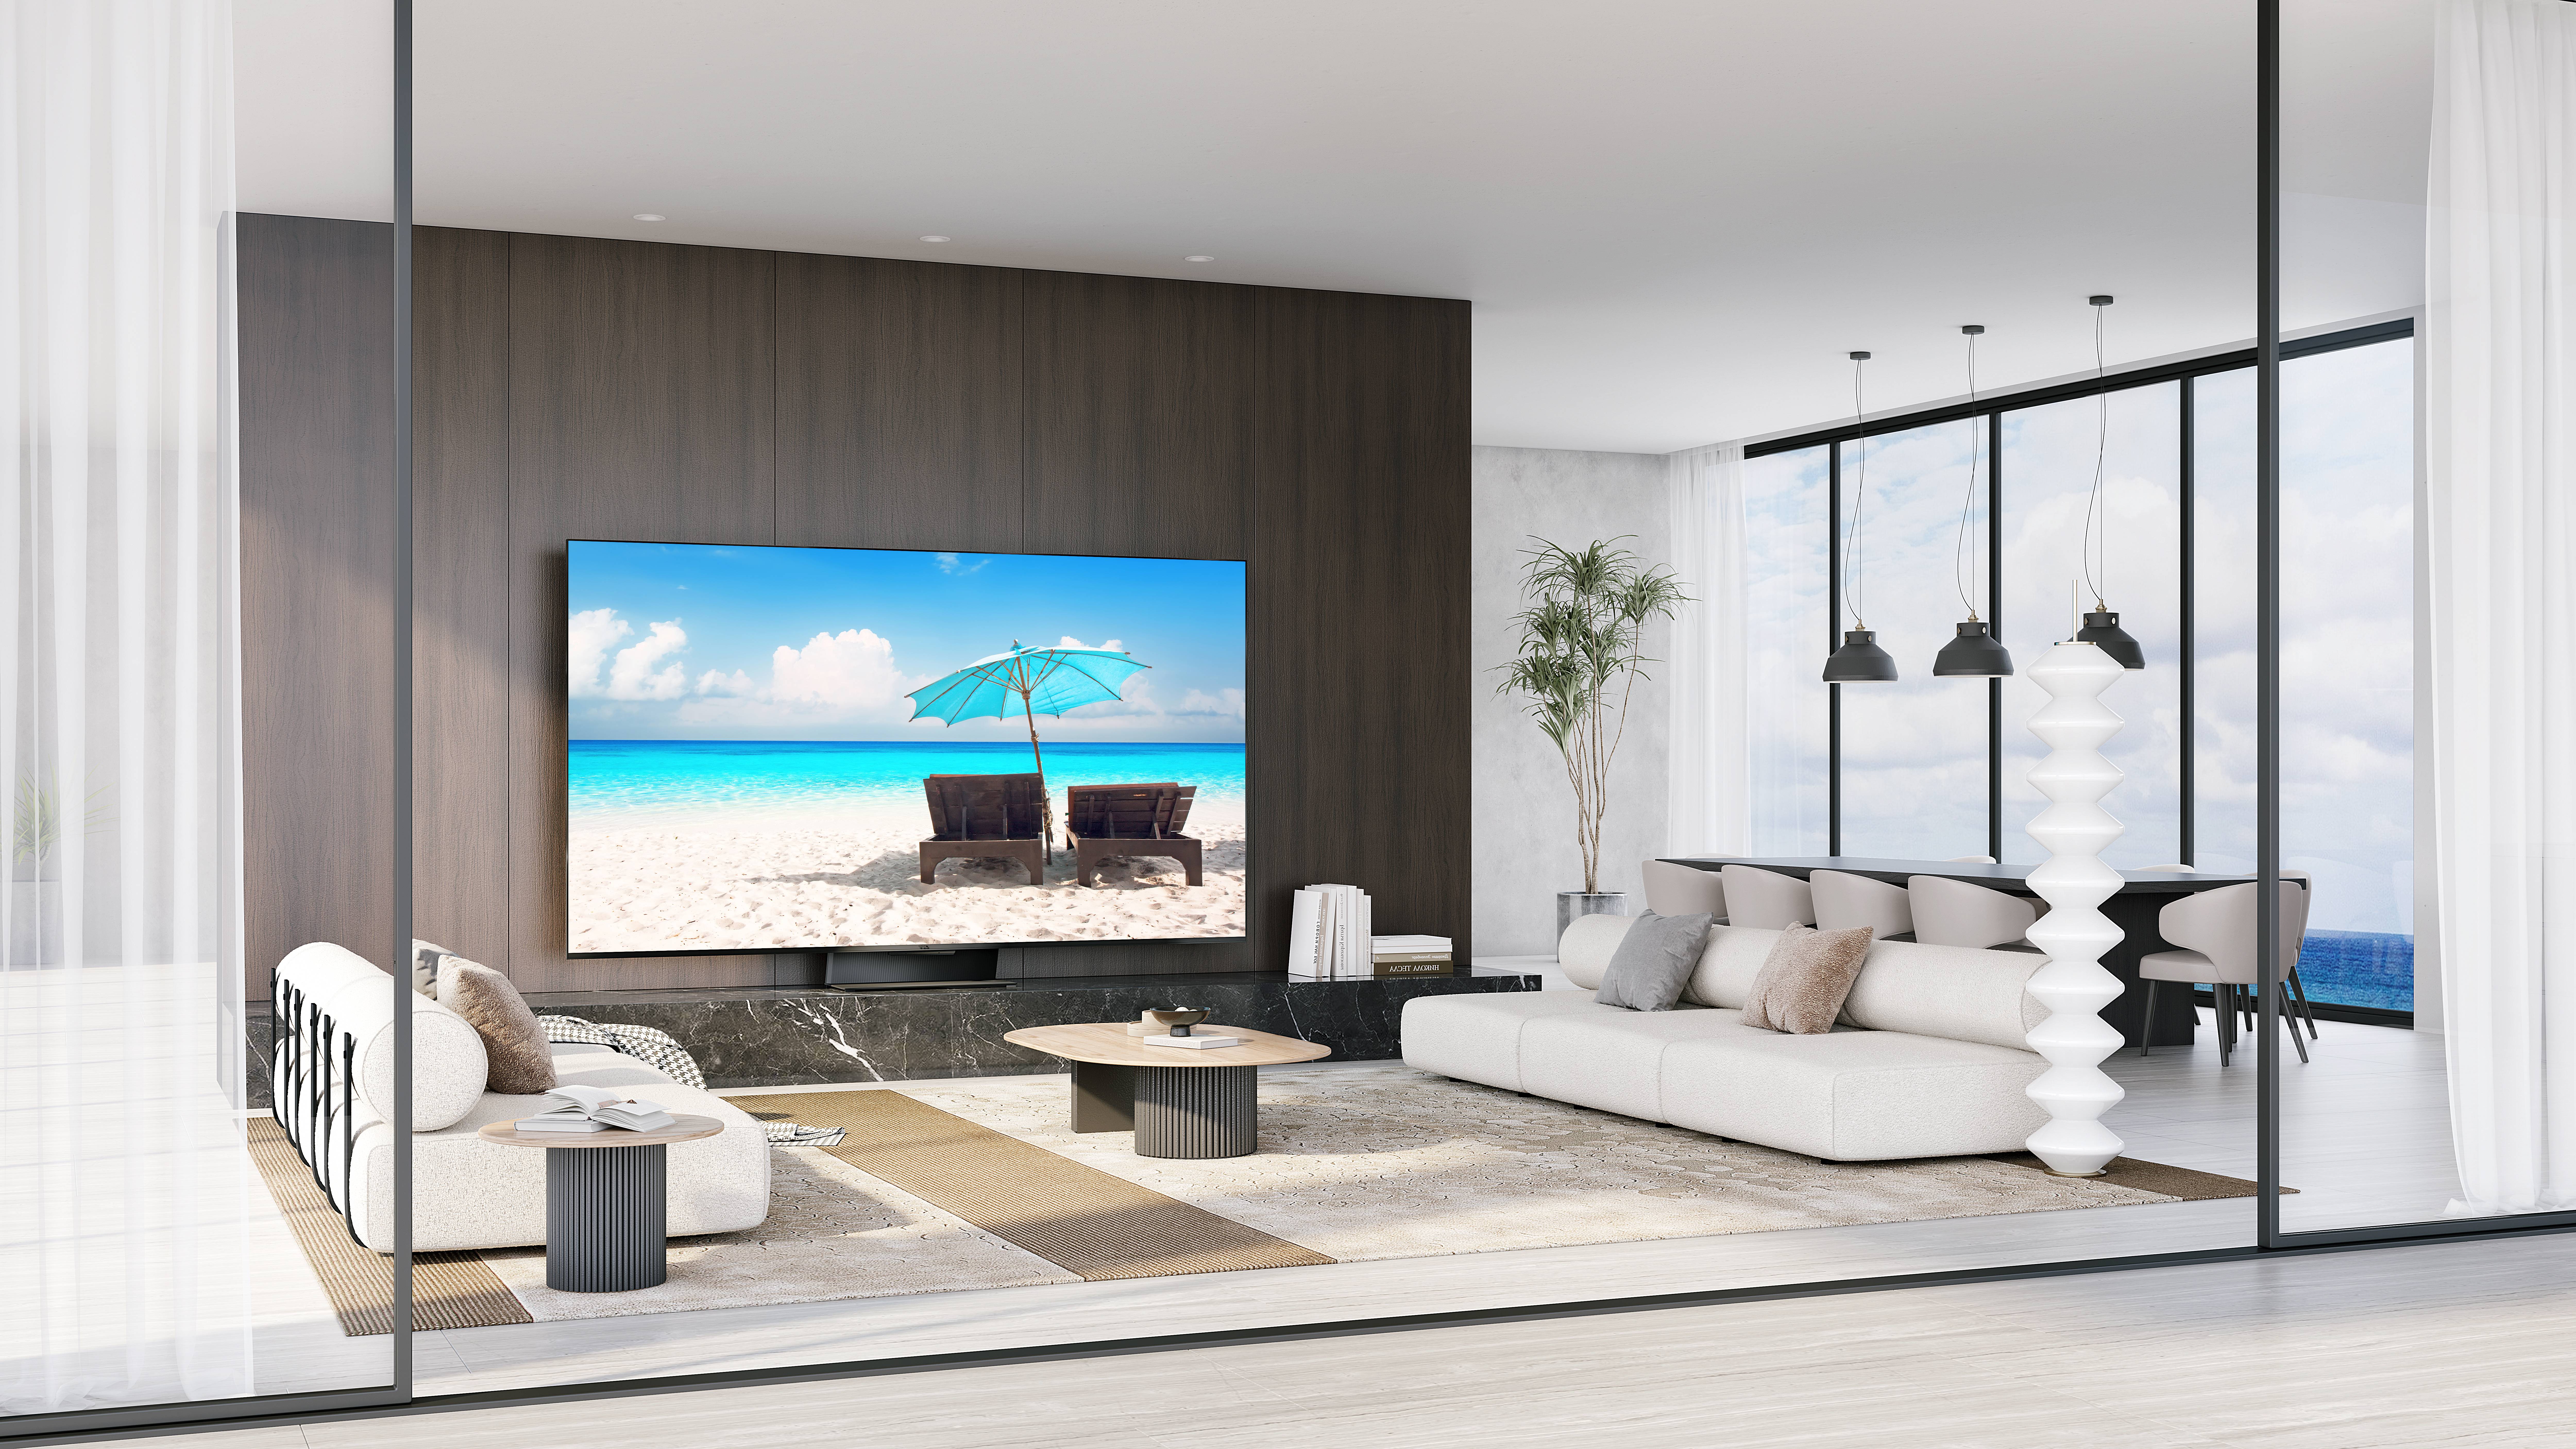 TCL's C83K mini LED TV in a bright, white living room